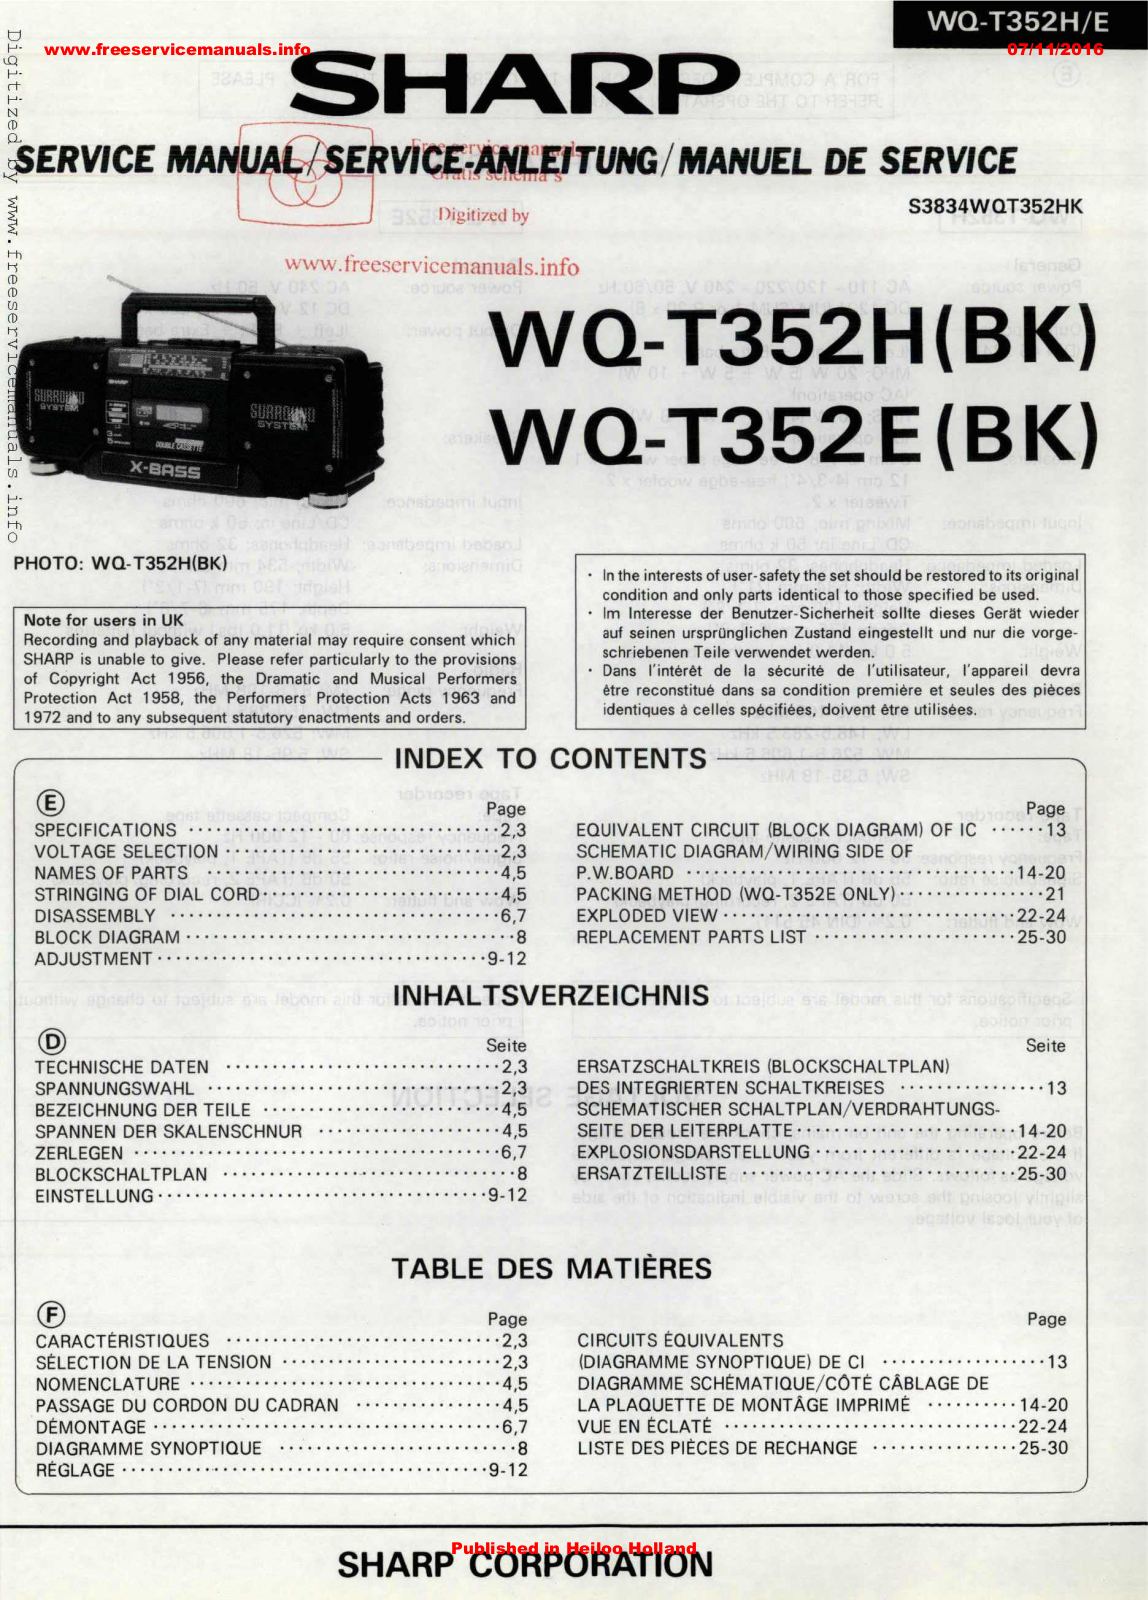 Sharp WQ-T352H, WQ-T352E Service Manual